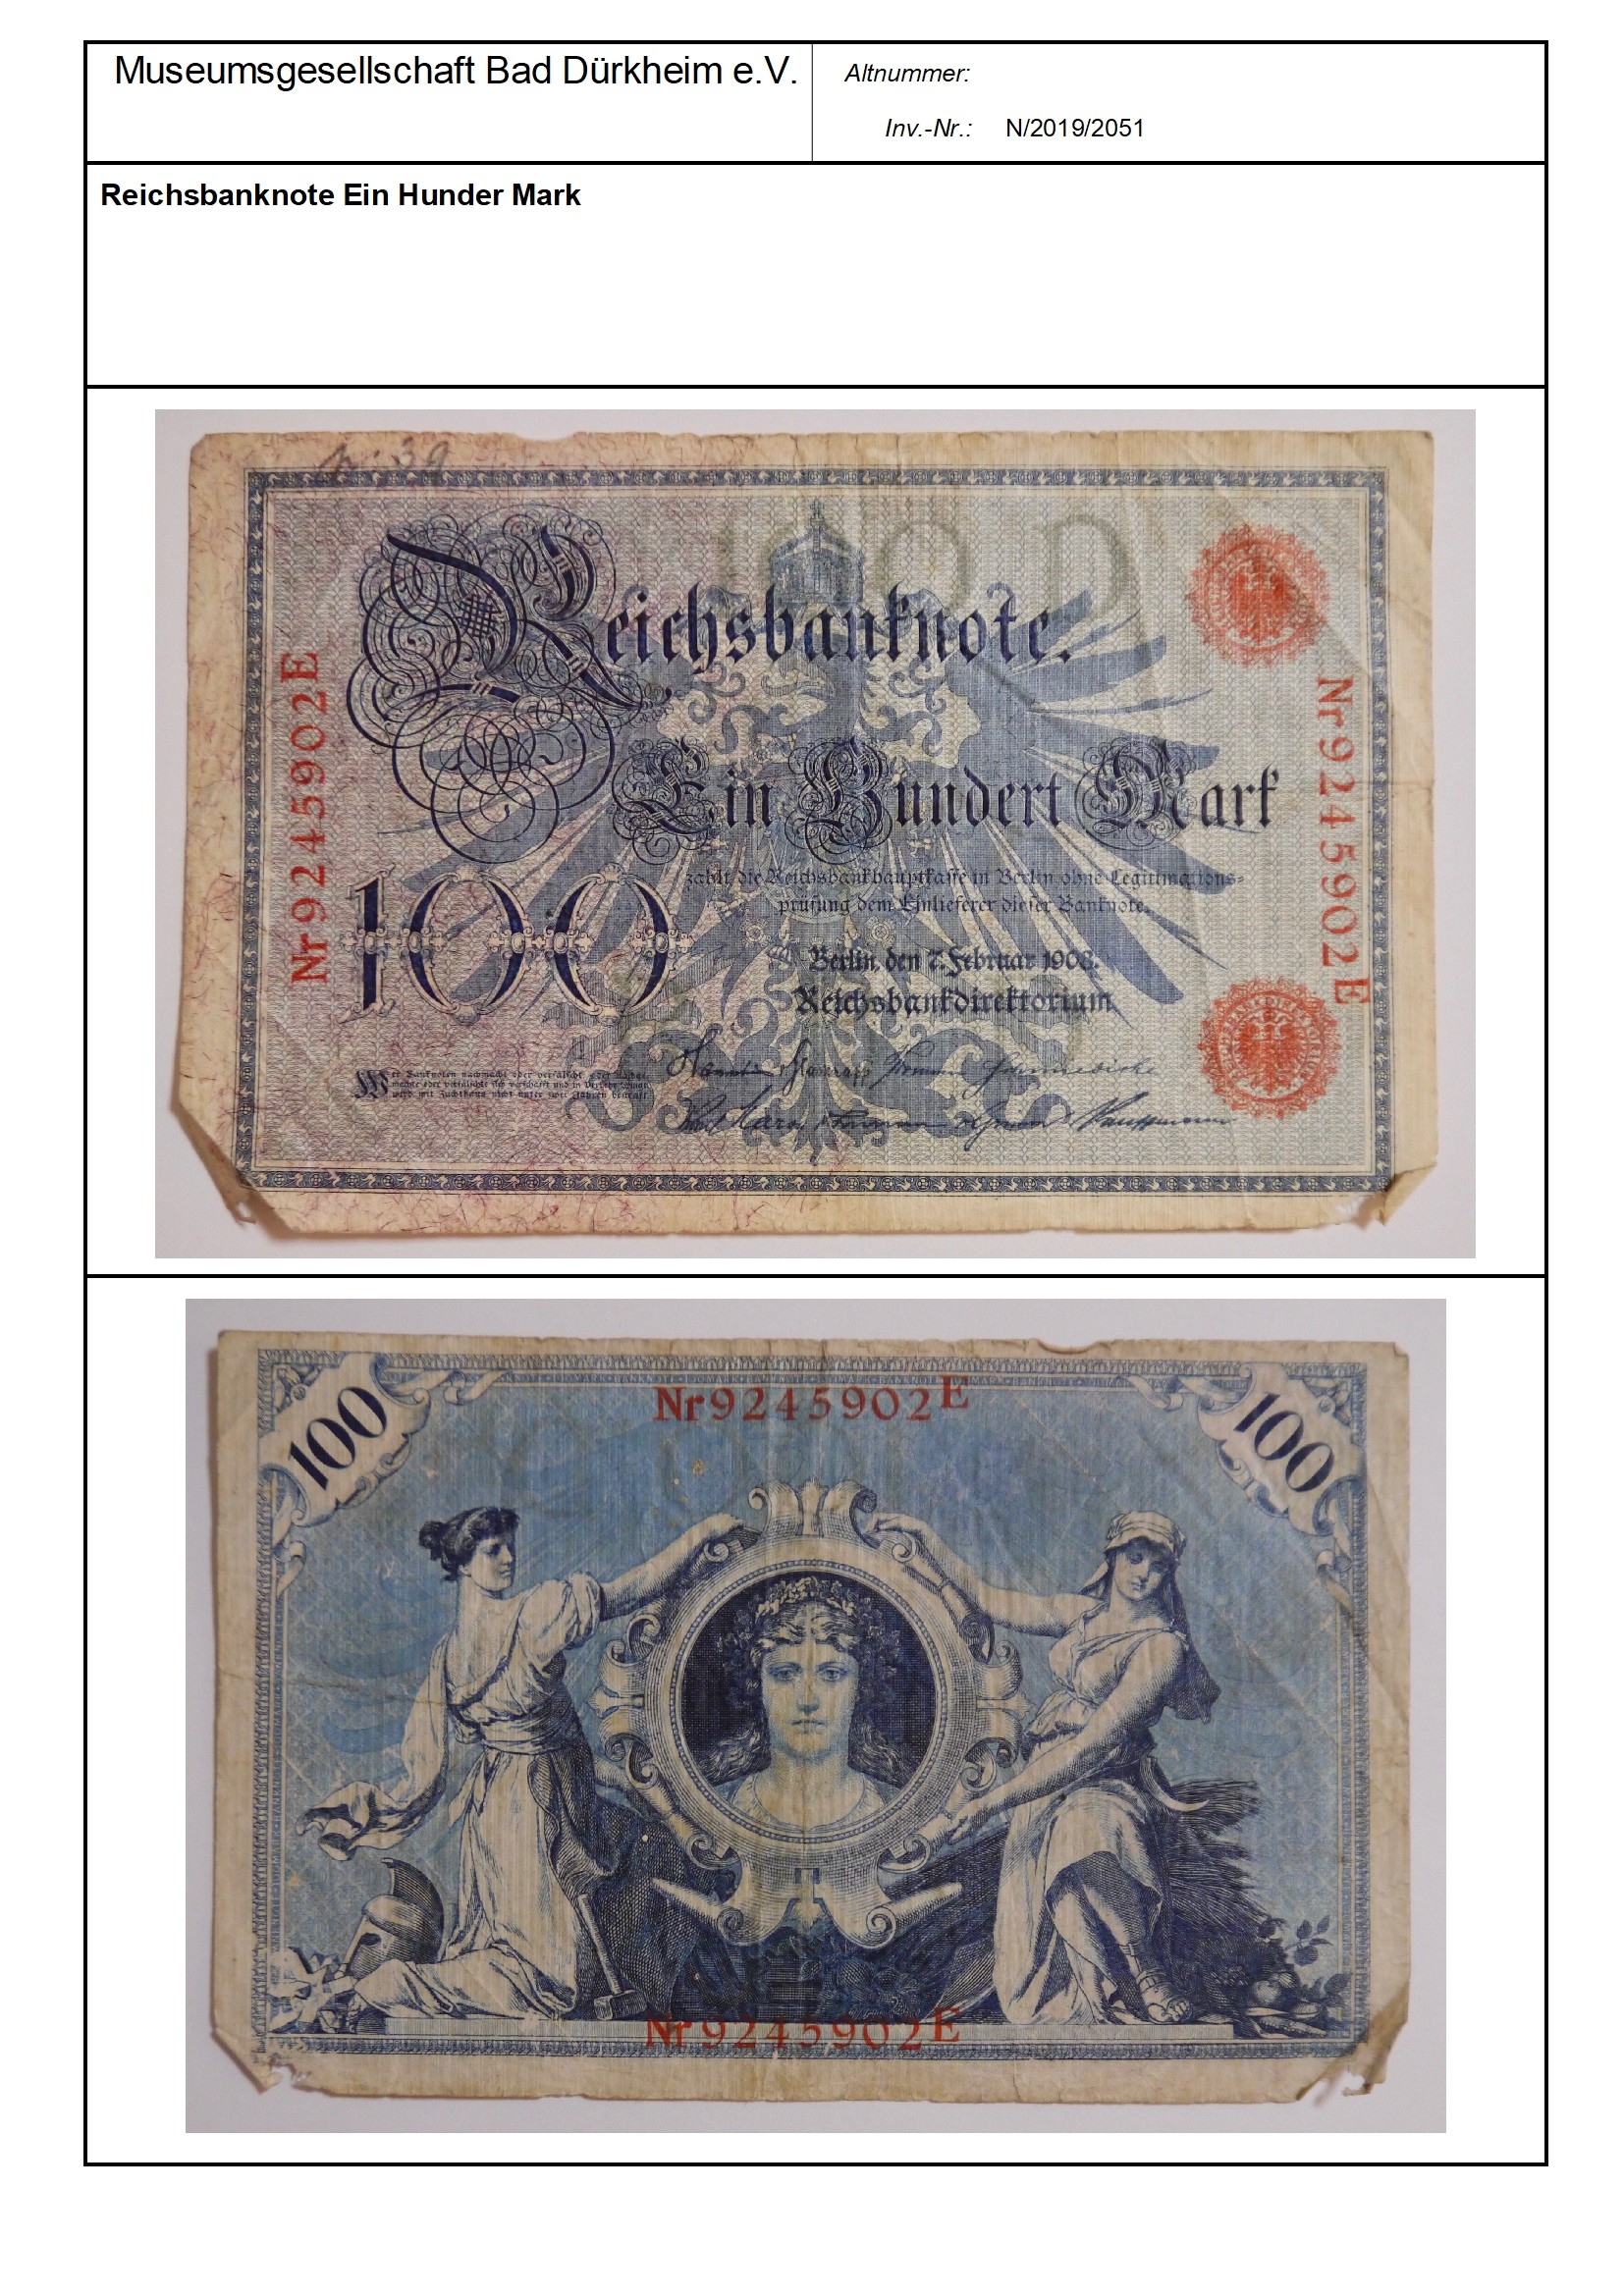 Reichsbanknote Ein Hunder Mark
Serien-Nummer: Nr9245902E (Museumsgesellschaft Bad Dürkheim e.V. CC BY-NC-SA)